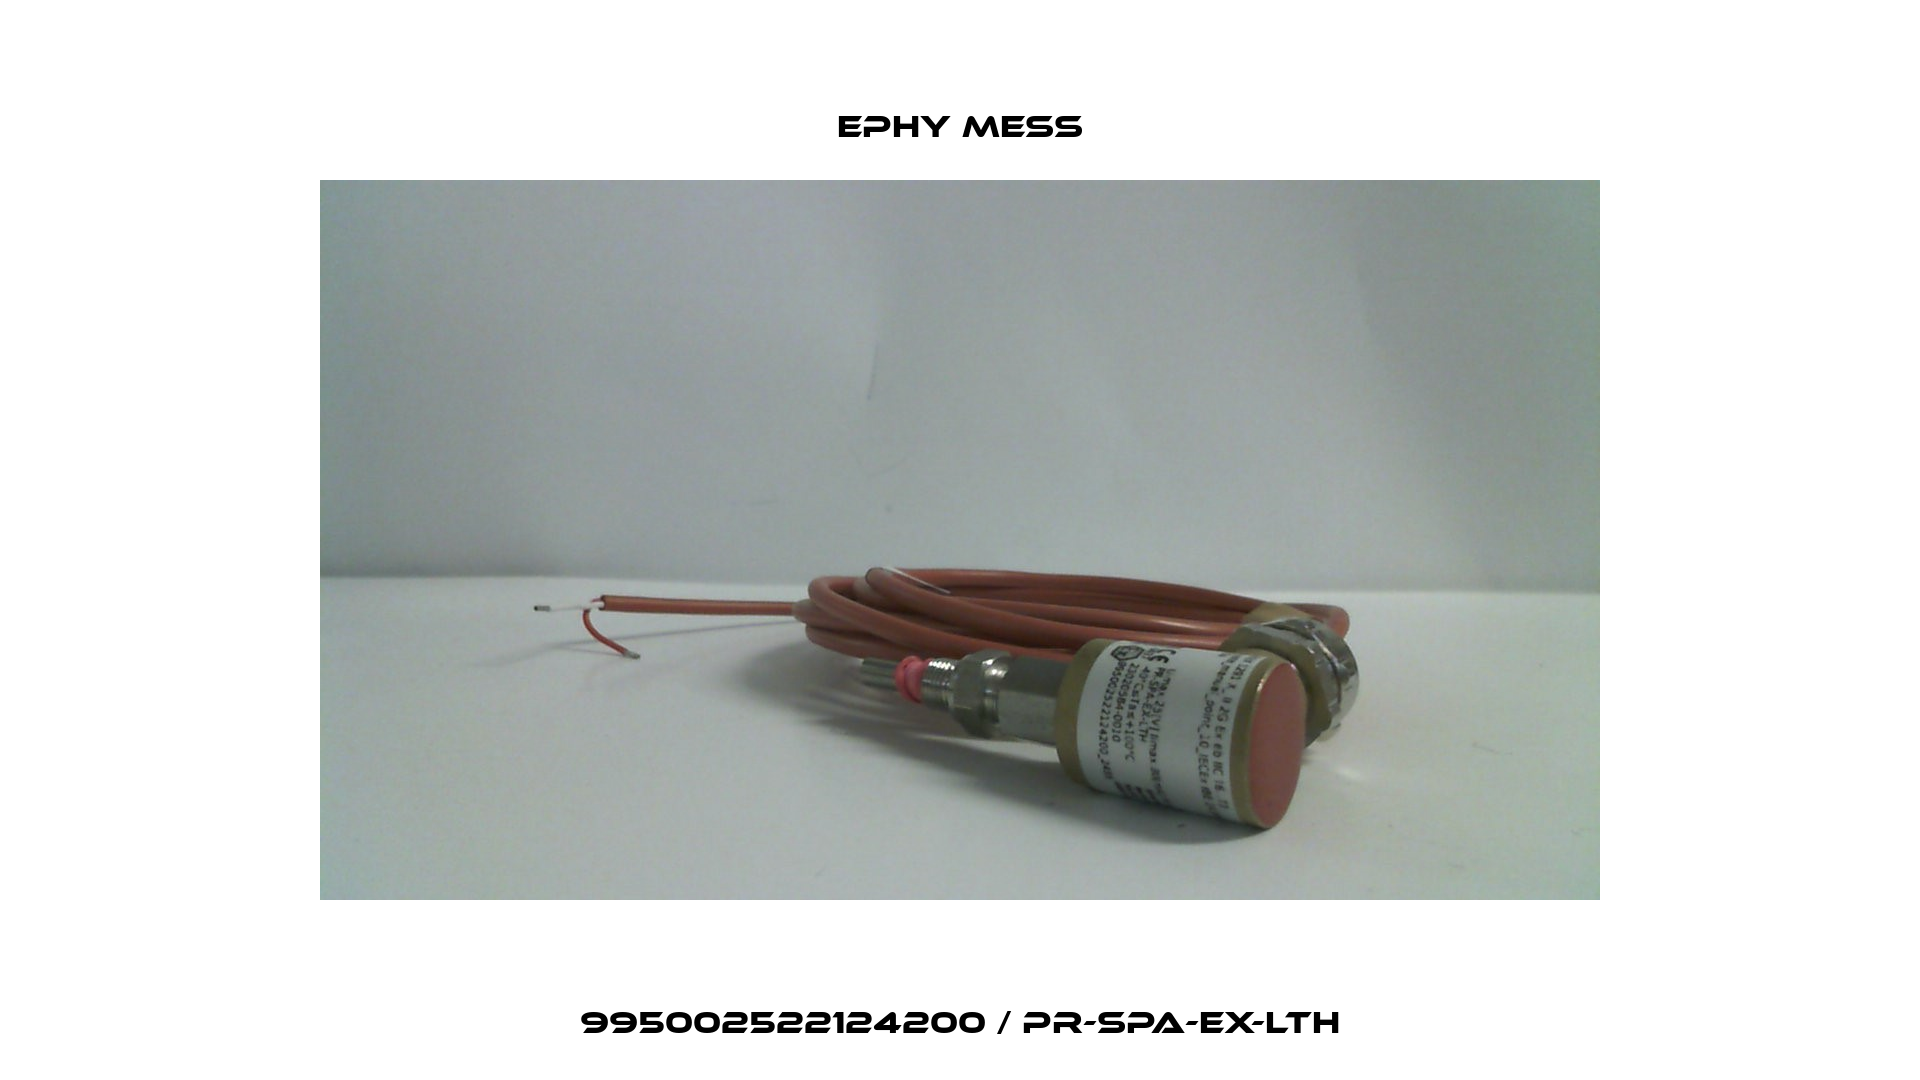 995002522124200 / PR-SPA-EX-LTH Ephy Mess